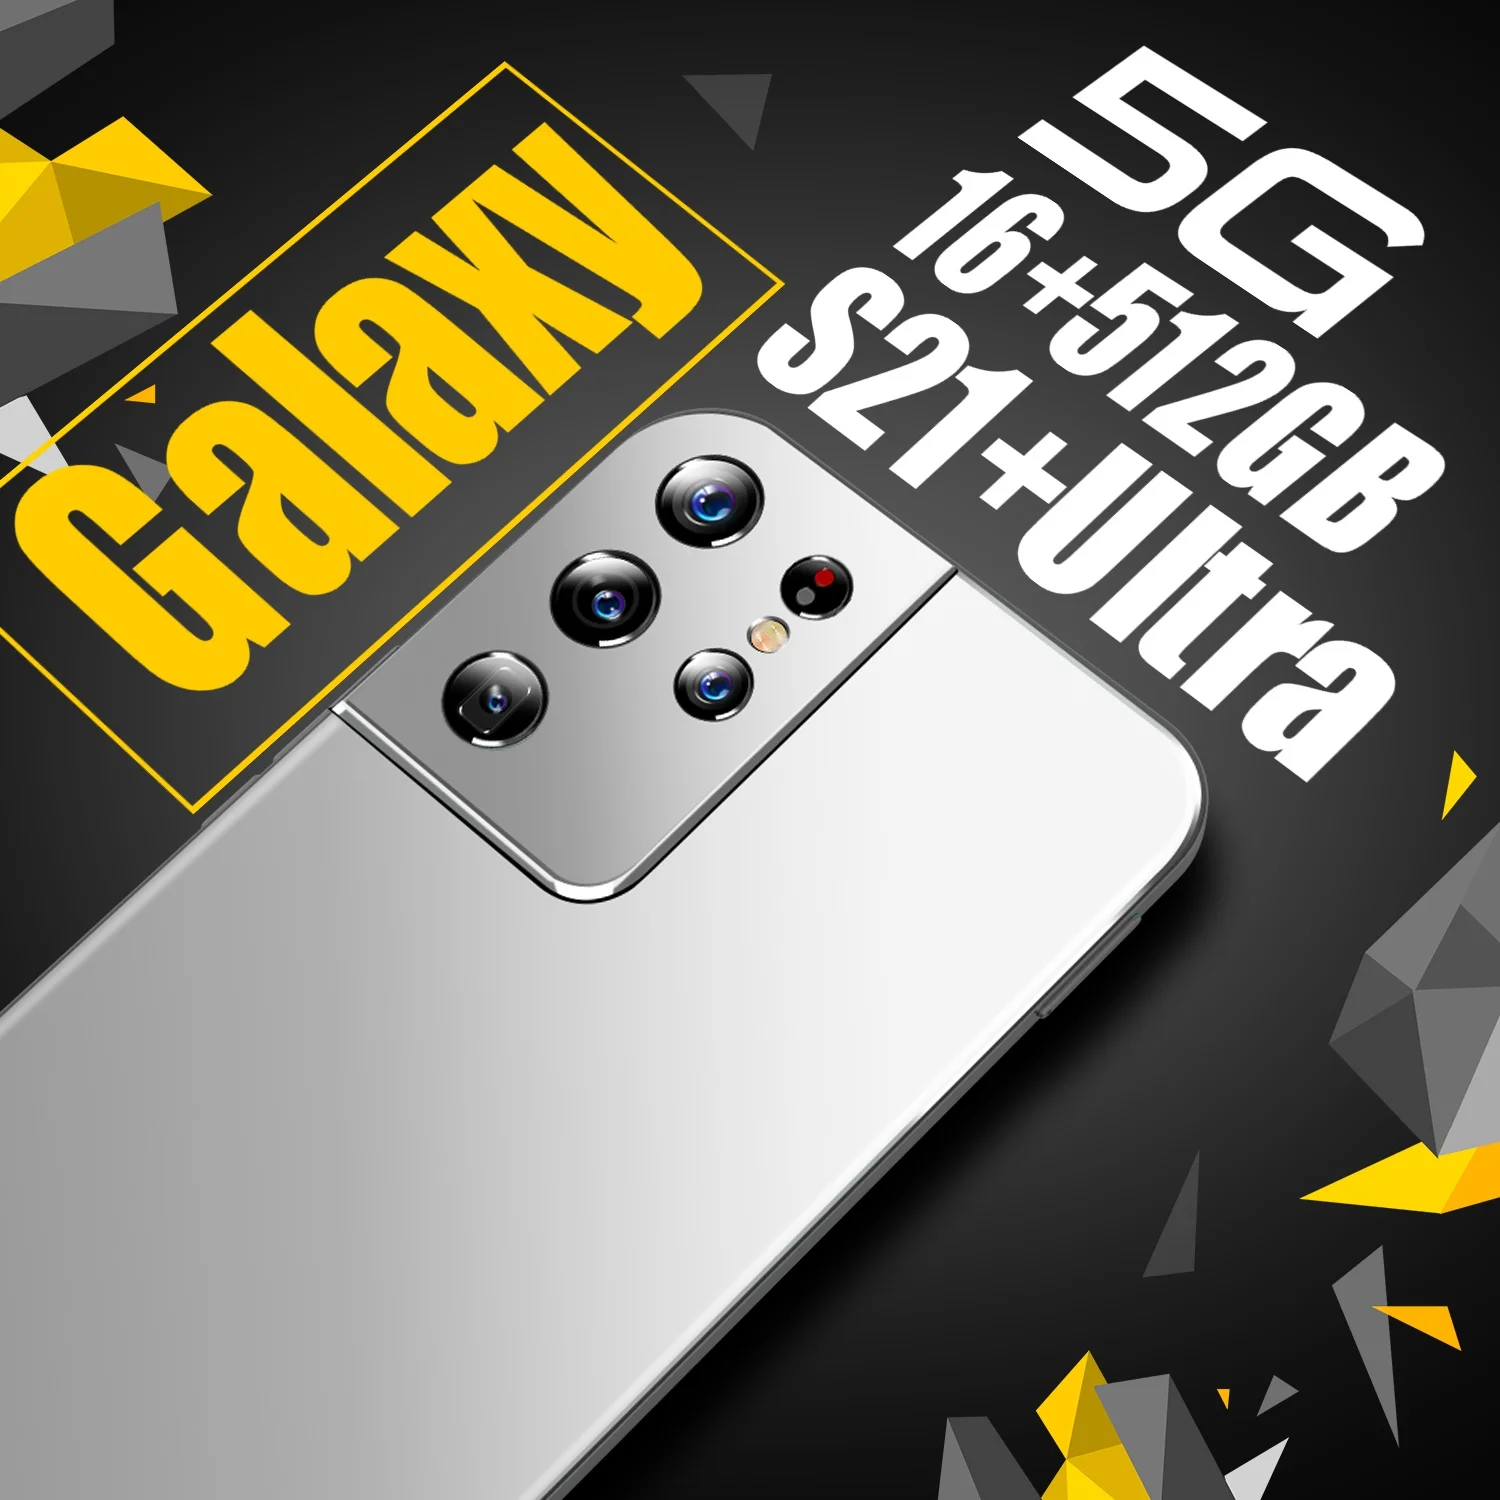 

Смартфон Galax S21 +, 7,3 дюйма, Android 10,0, 6800 мАч, 24 + 48 Мп, десять ядер, 16 ГБ ОЗУ, 512 Гб ПЗУ